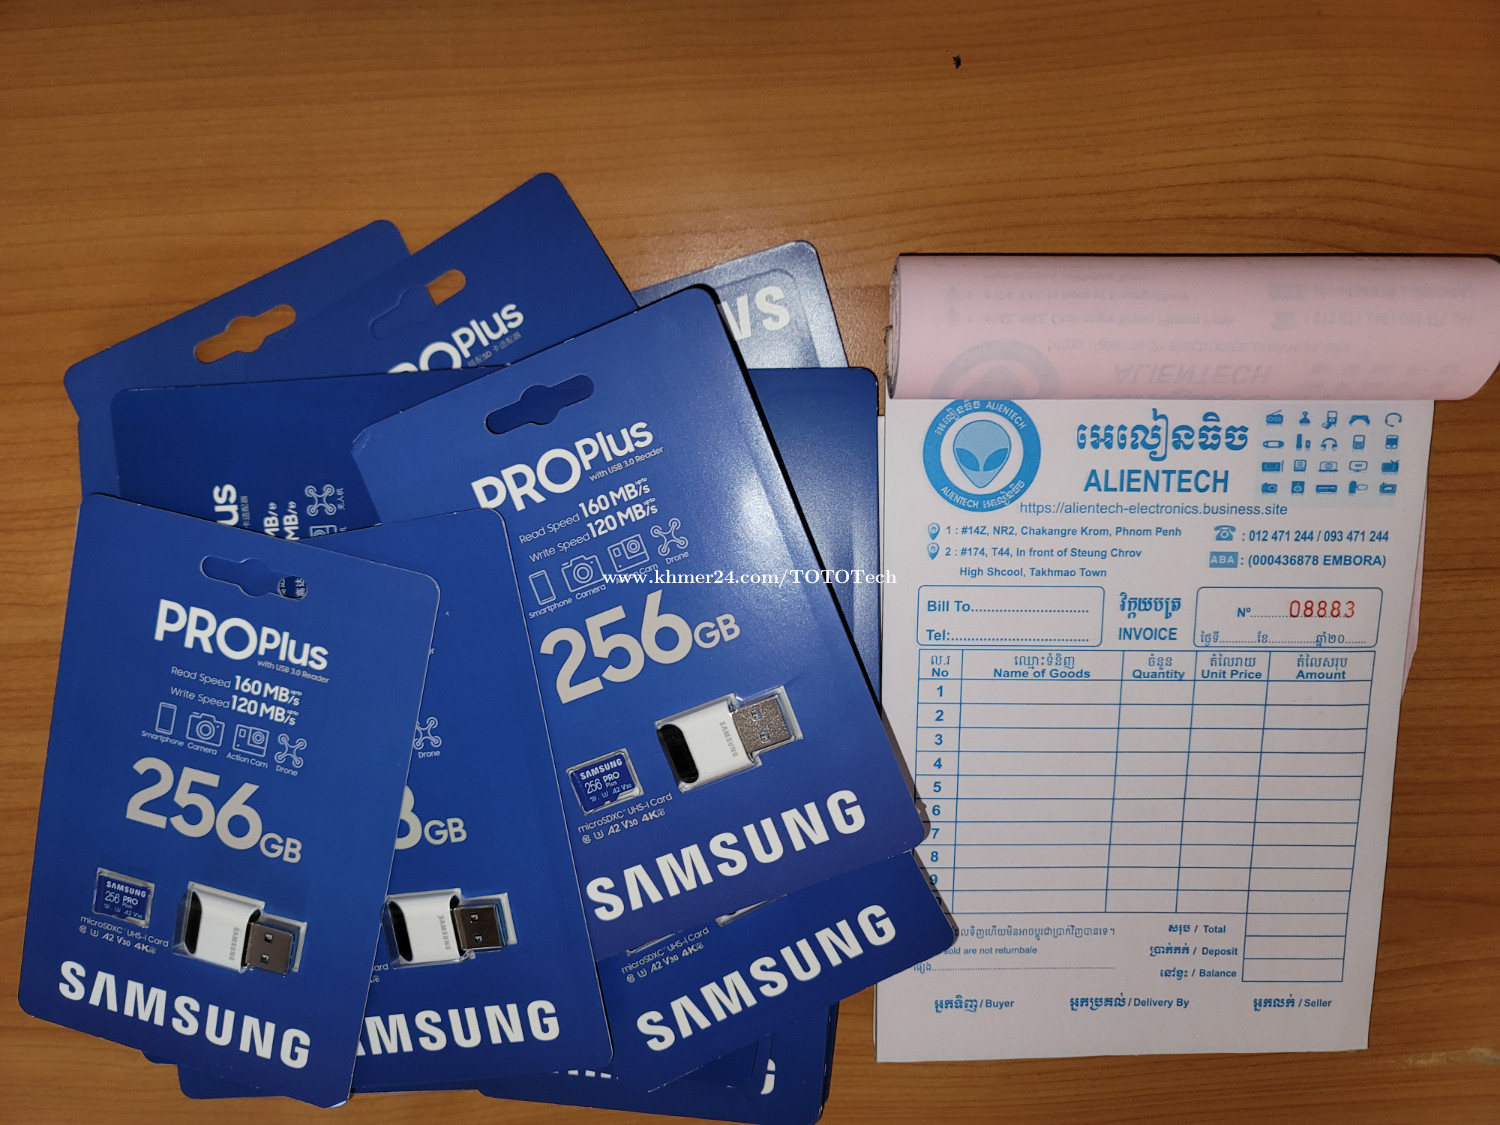 SAMSUNG Samsung PRO Plus microSD Card 256GB + USB Card Reader